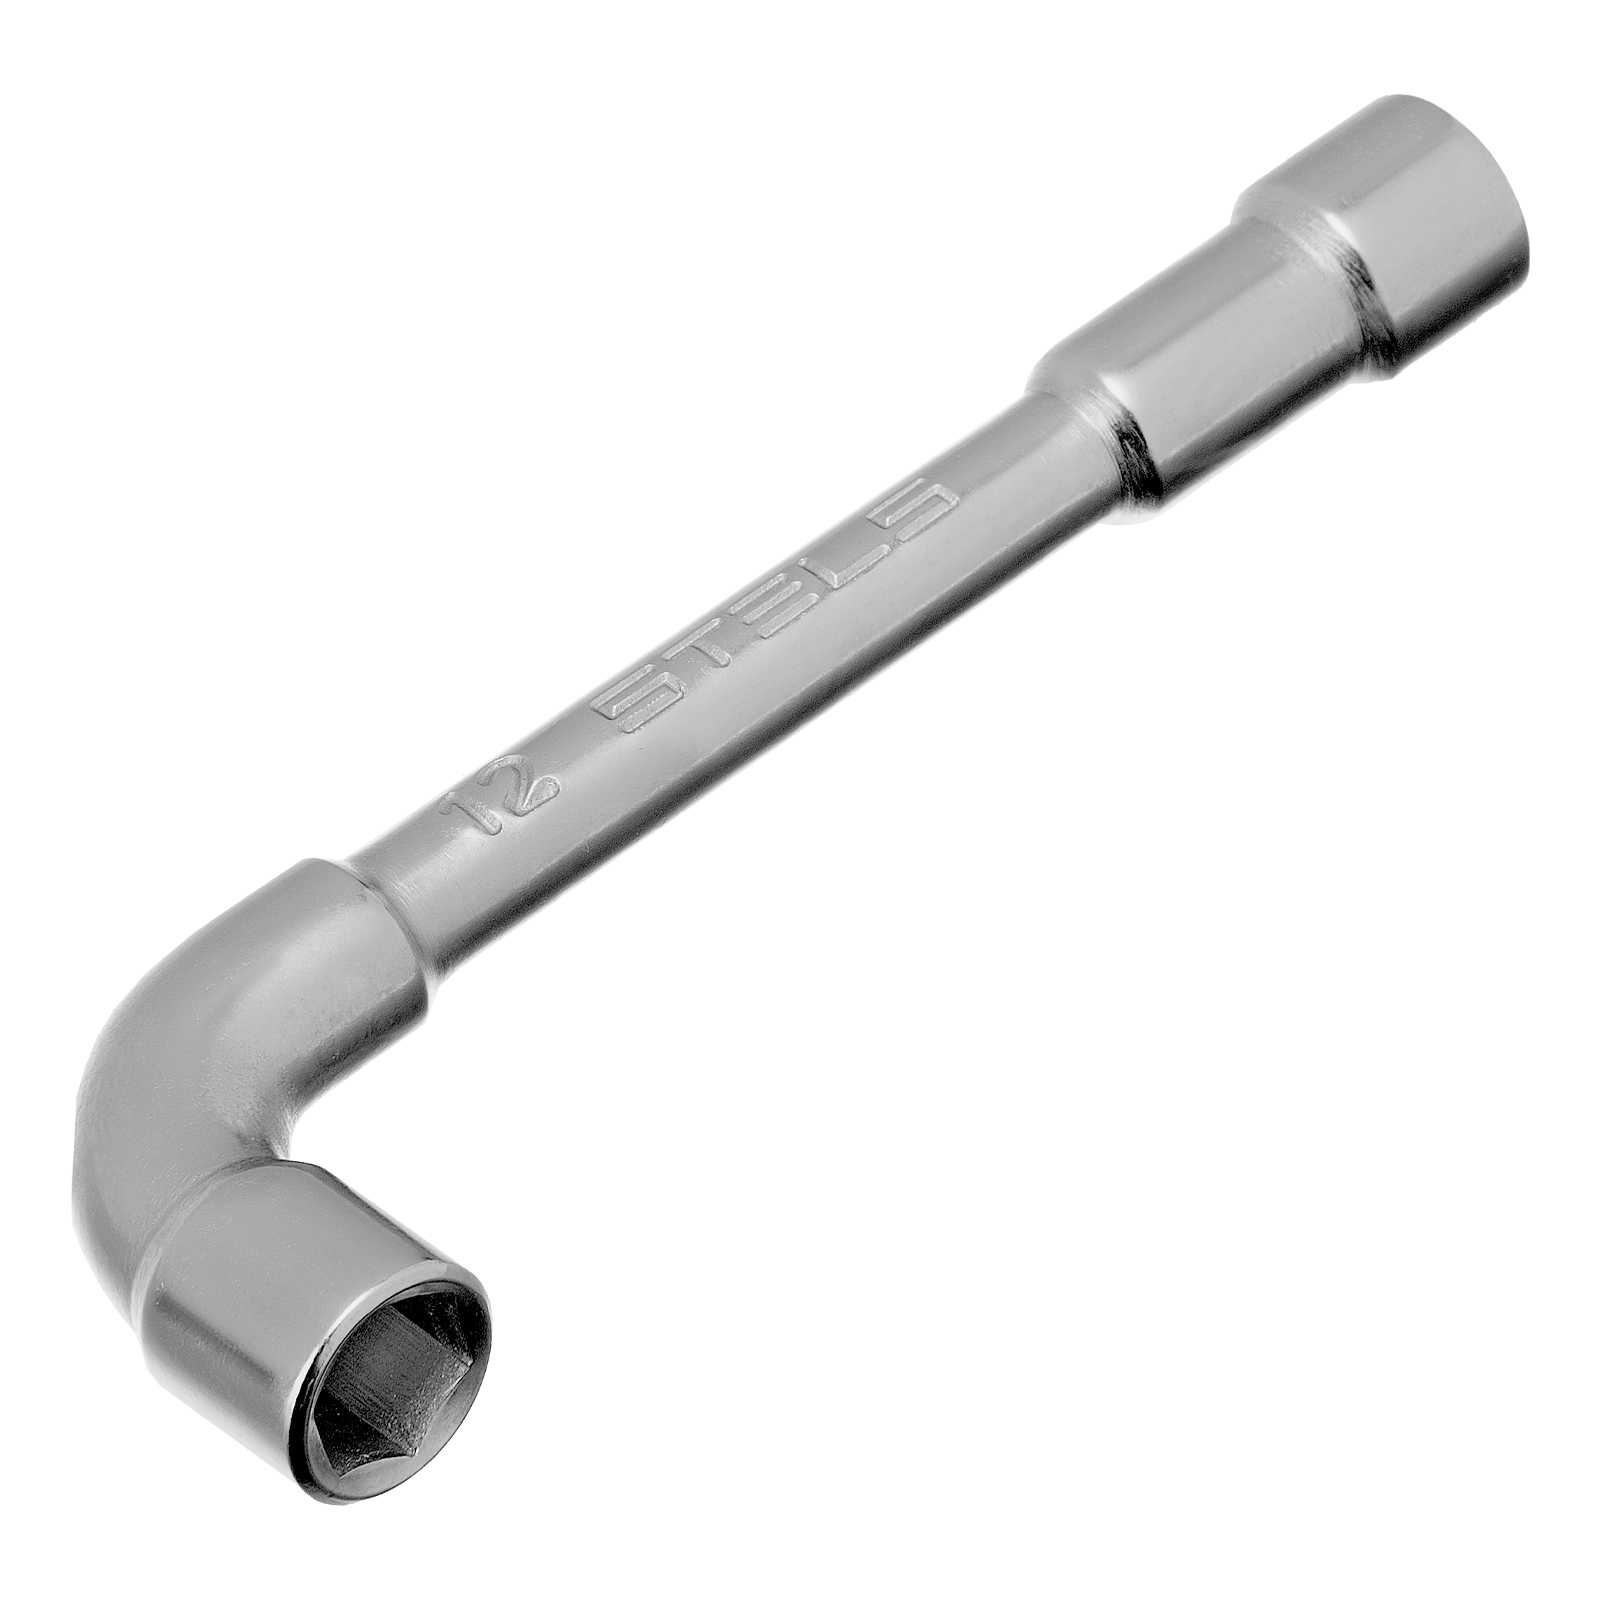 Торцевой трубчатый ключ STELS 14233 торцевой трубчатый ключ stels 13775